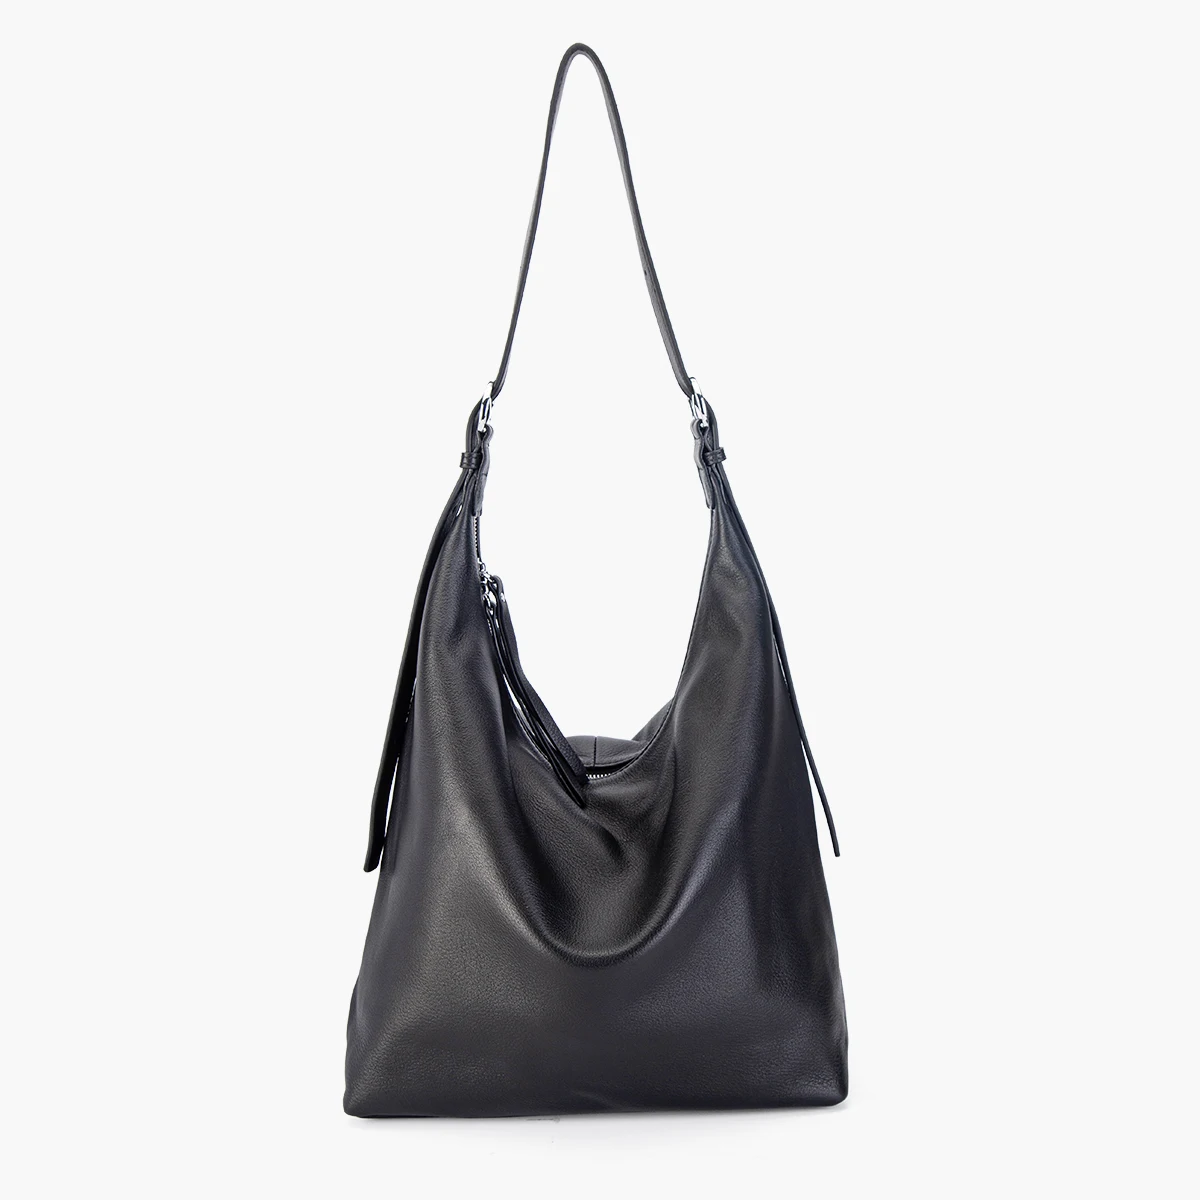 

DONNAIN Large Capacious Soft Leather Shoulder Bags Women Premium Full-Grain Genuine Leather Casual Black Tote Bags Plus Size